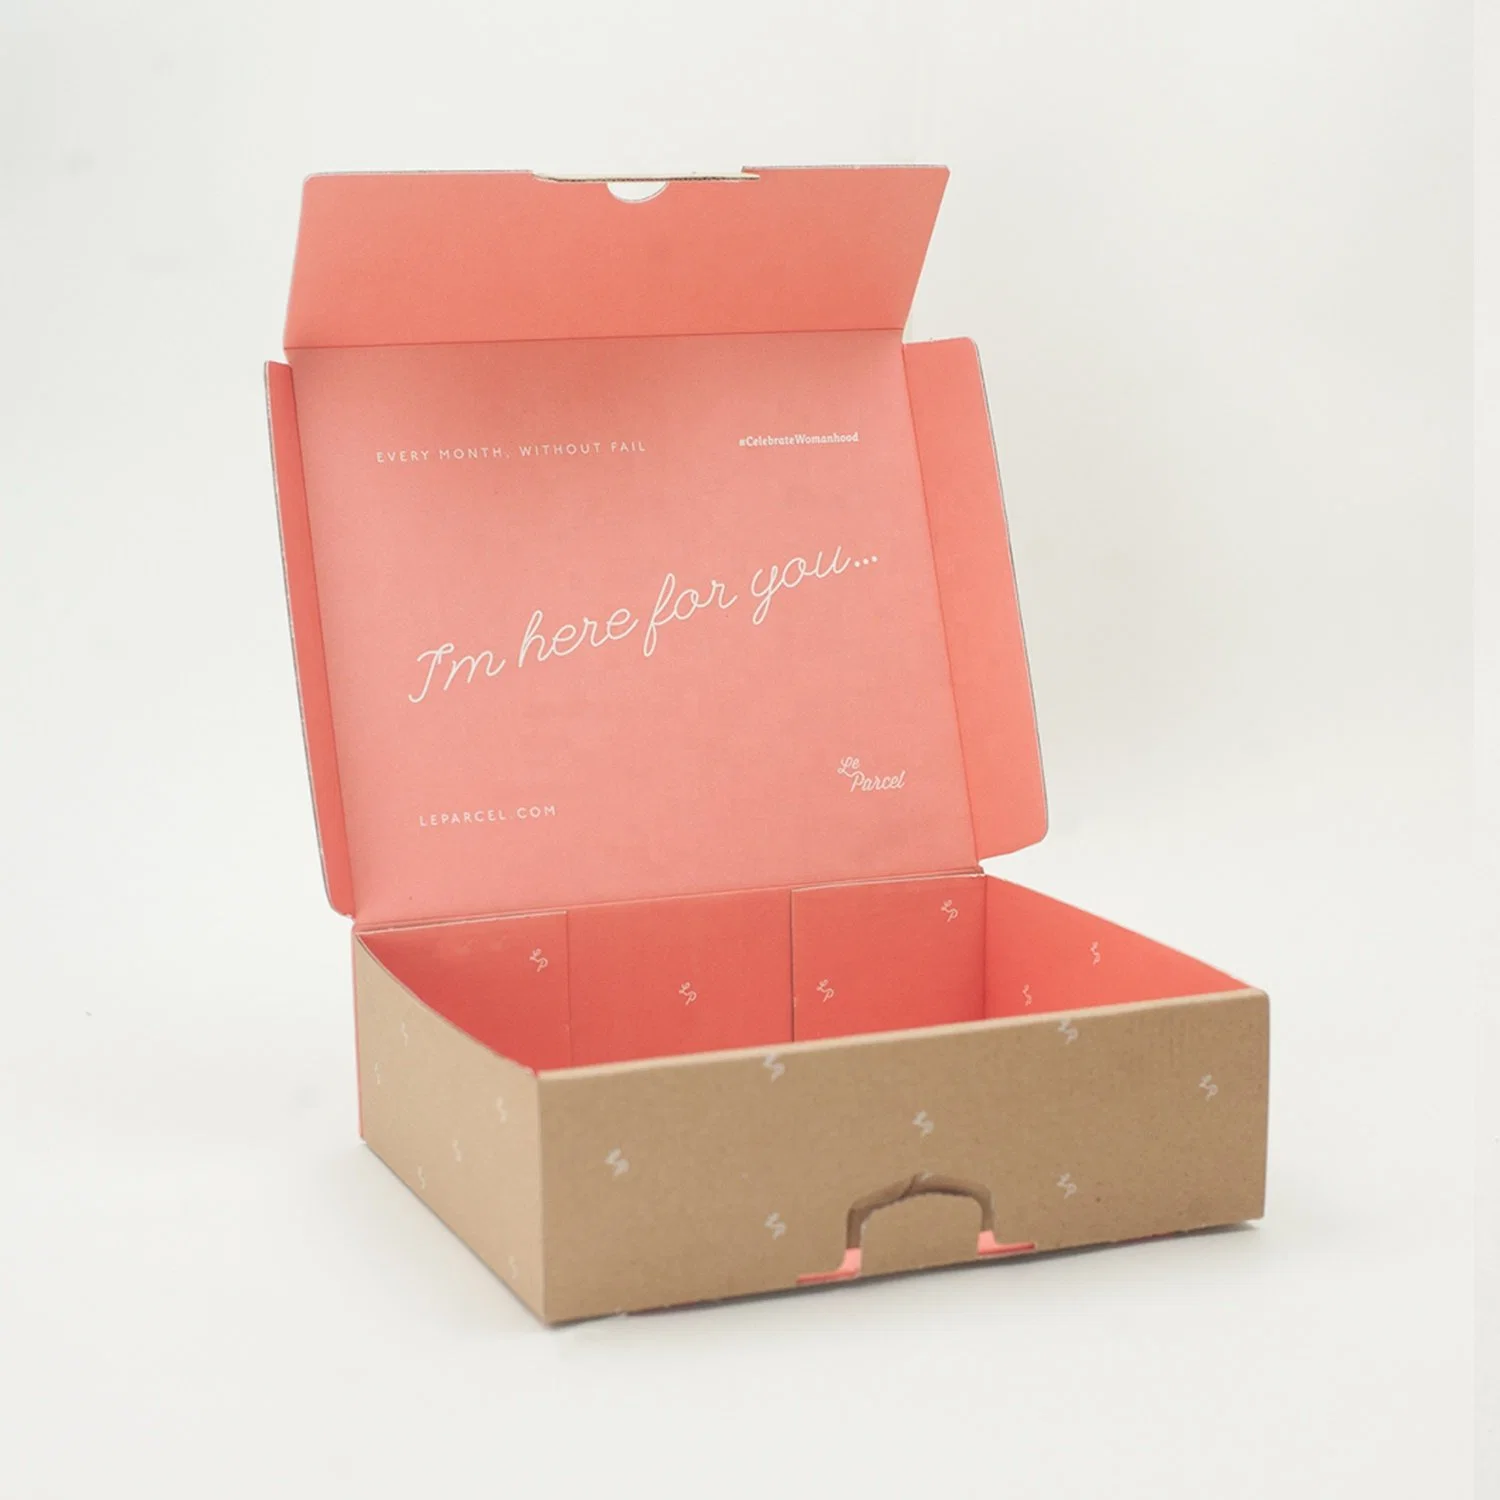 Hot Pink Logotipo personalizado impreso caja de embalaje para mailing E-Commerce producto envasado, Embalaje Personalizado Cajas de Sobres Imprimir